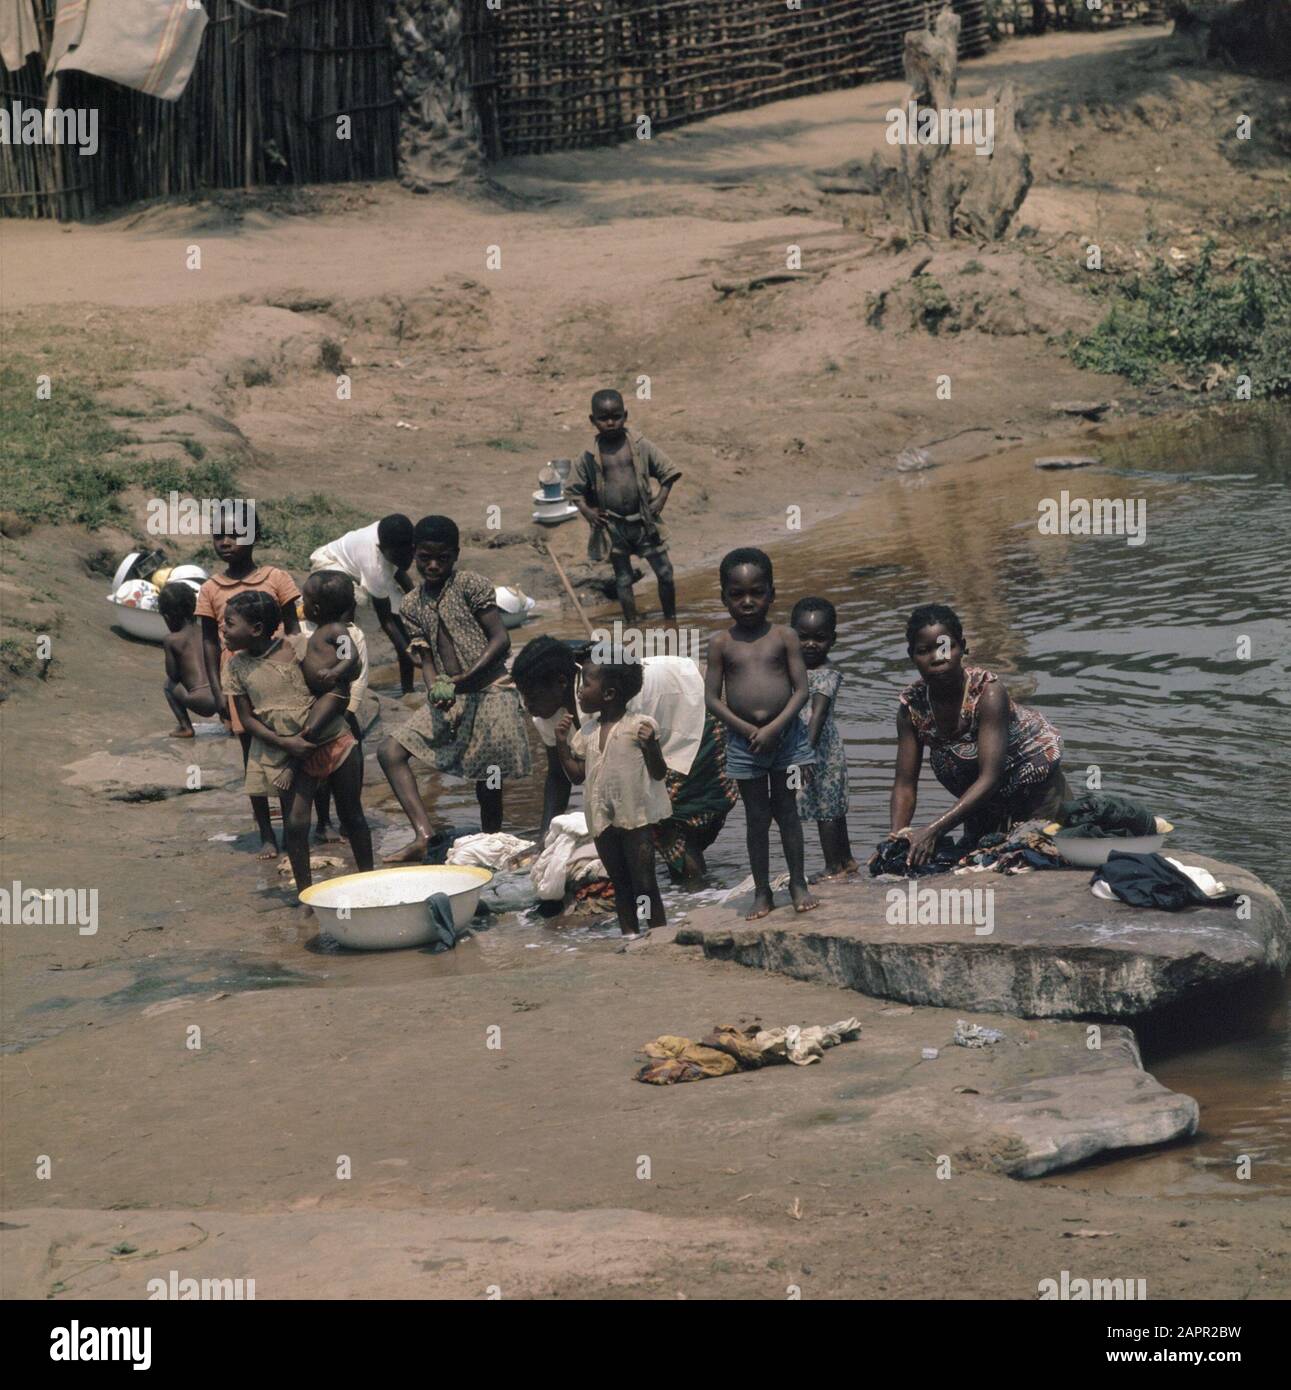 Zaire (früher Belgisch-Kongo); Lager für angolanische Flüchtlinge in Zaire Datum: 16. August 1973 Ort: Belgisch-Kongo, Zaire Schlüsselwörter: REGUIDE Stockfoto